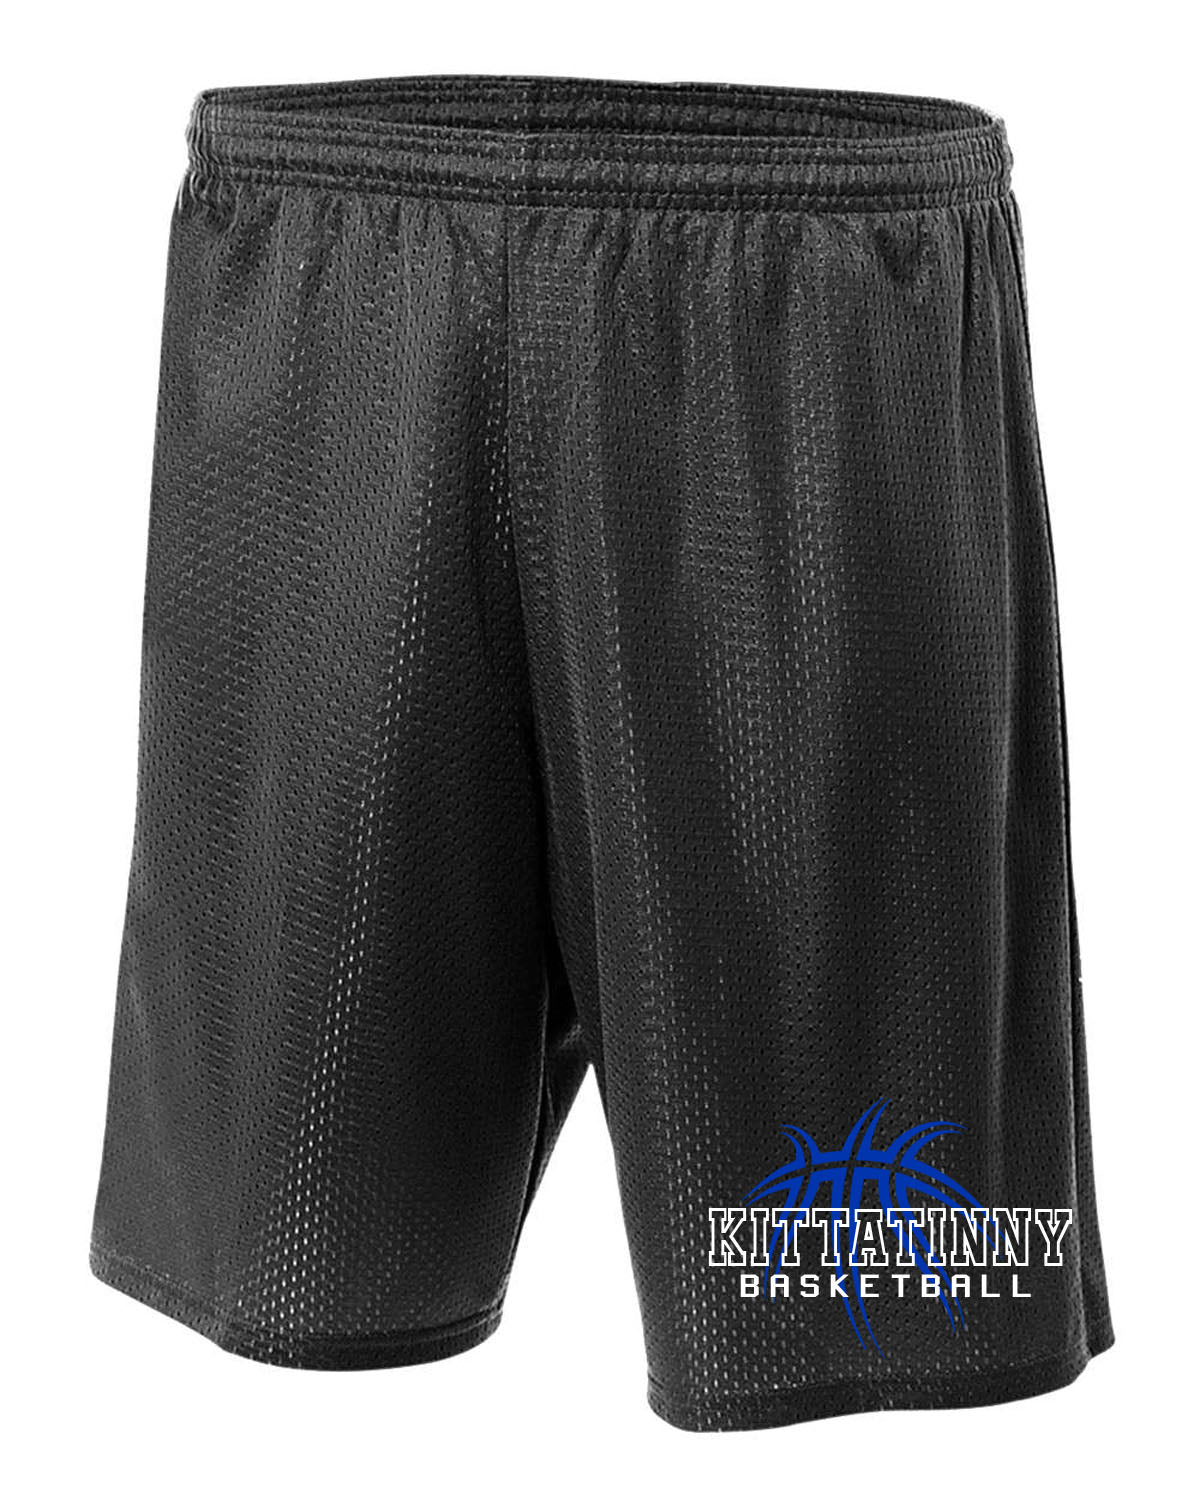 Kittatinny Basketball Design 4 Mesh Shorts